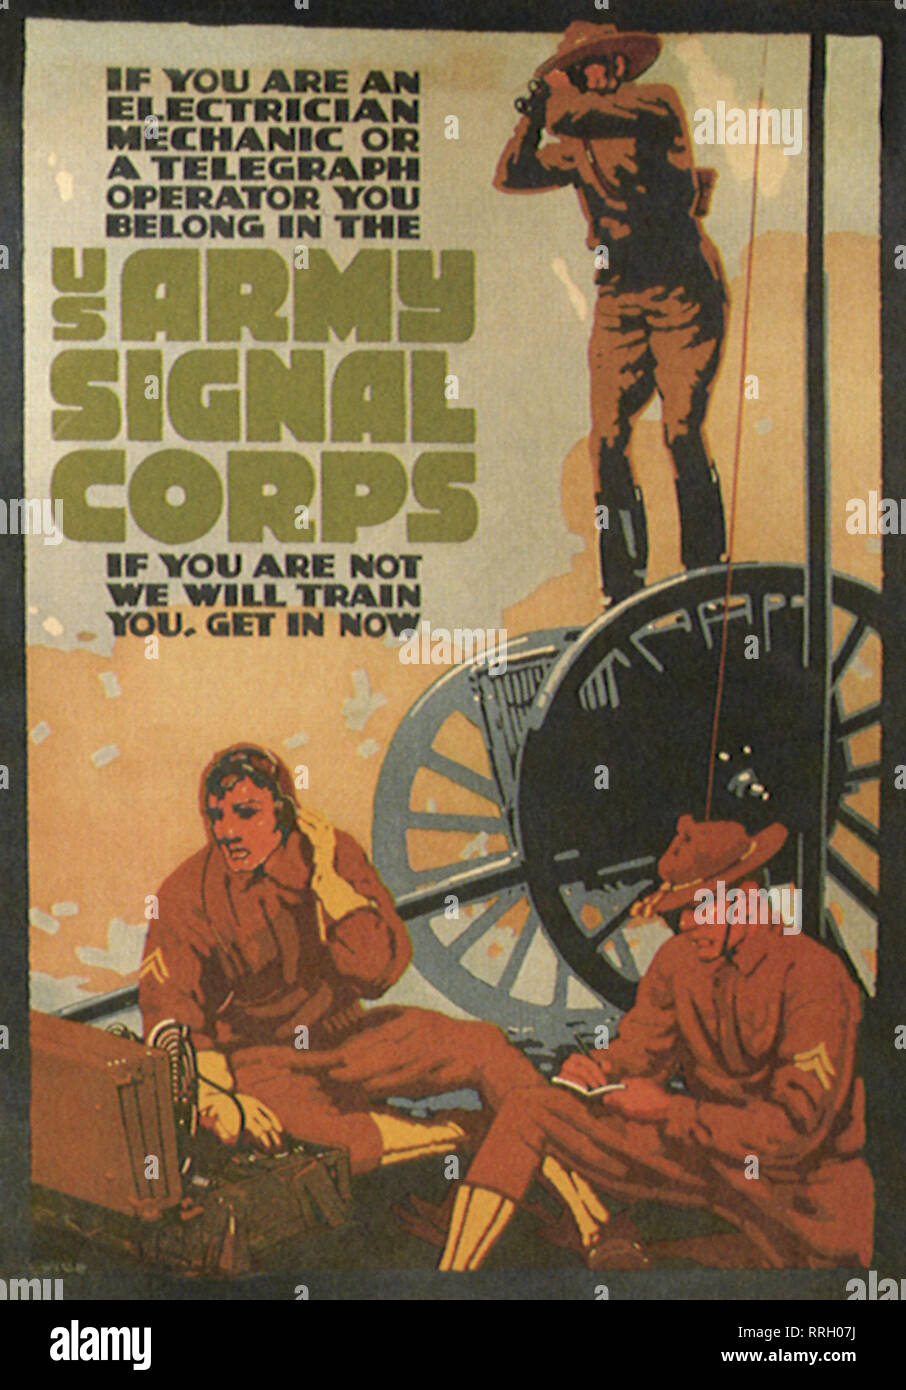 U.S. Army Signal Corps. Stock Photo